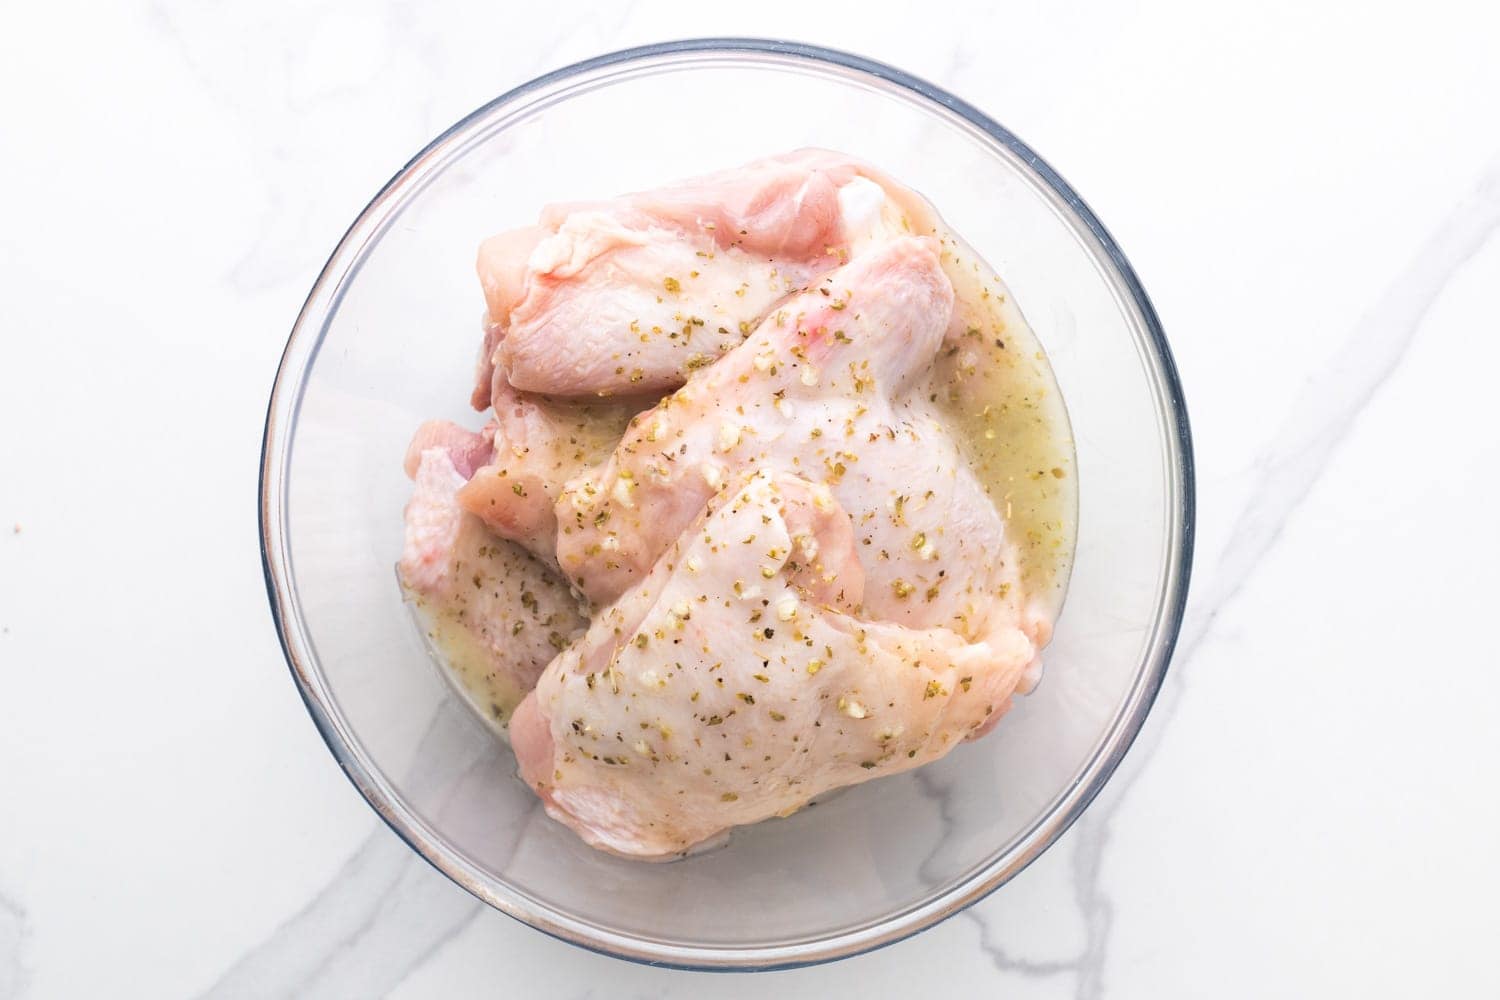 raw chicken thighs marinating in greek dressing. 